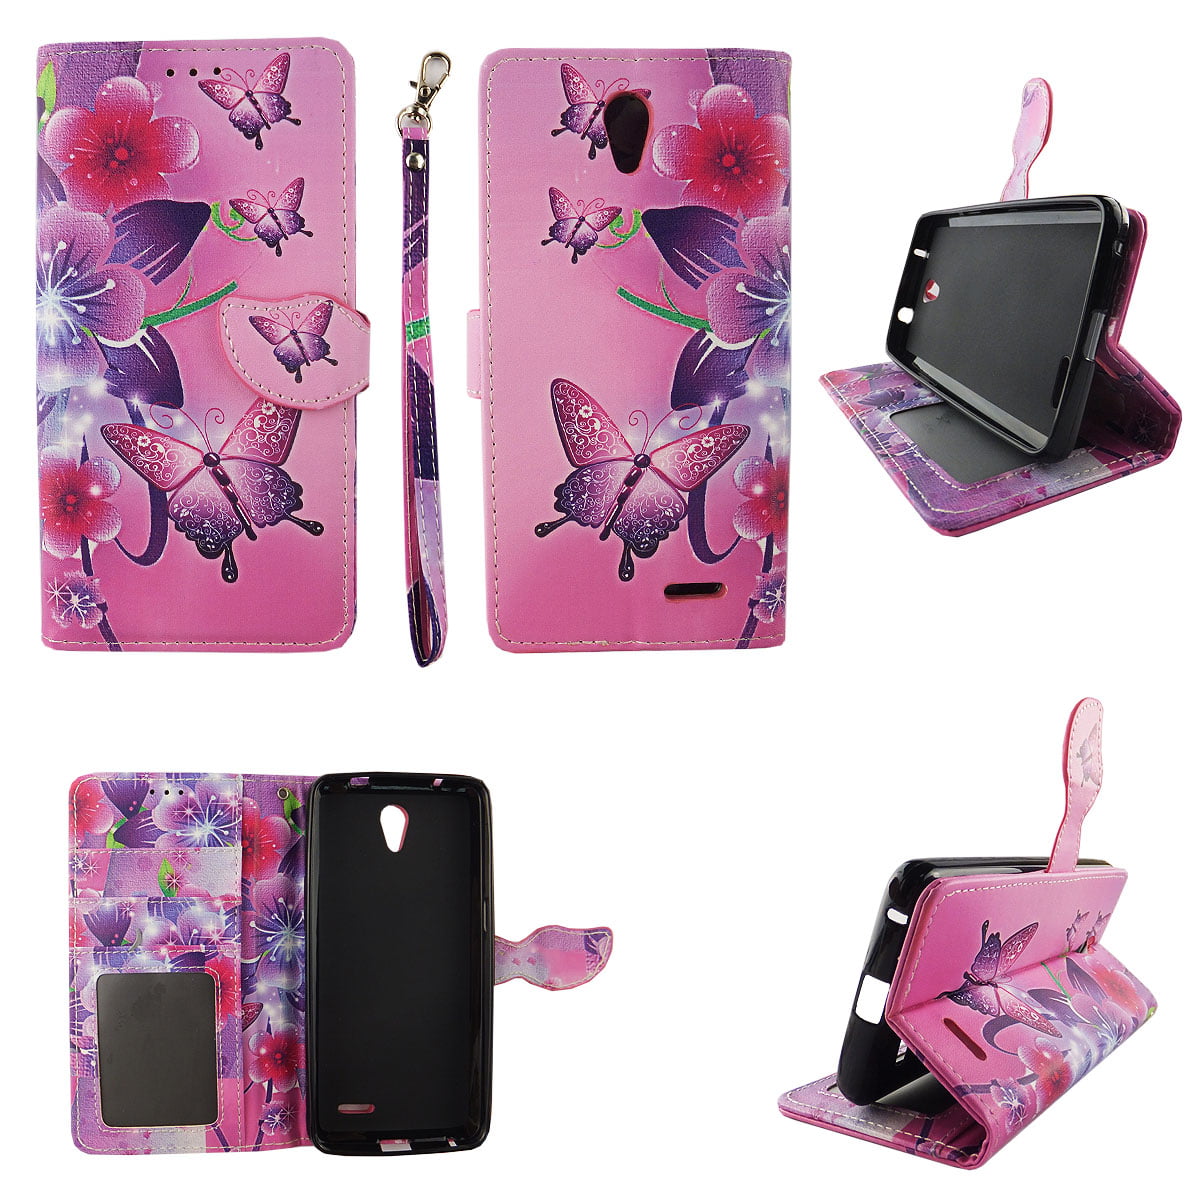 Butterfly Flower Pink Wallet Folio Case for ZTE Prestige Z9132 Avid Plus  Z828 Fashion Flip PU Leather Cover Card Cash Slots & Stand